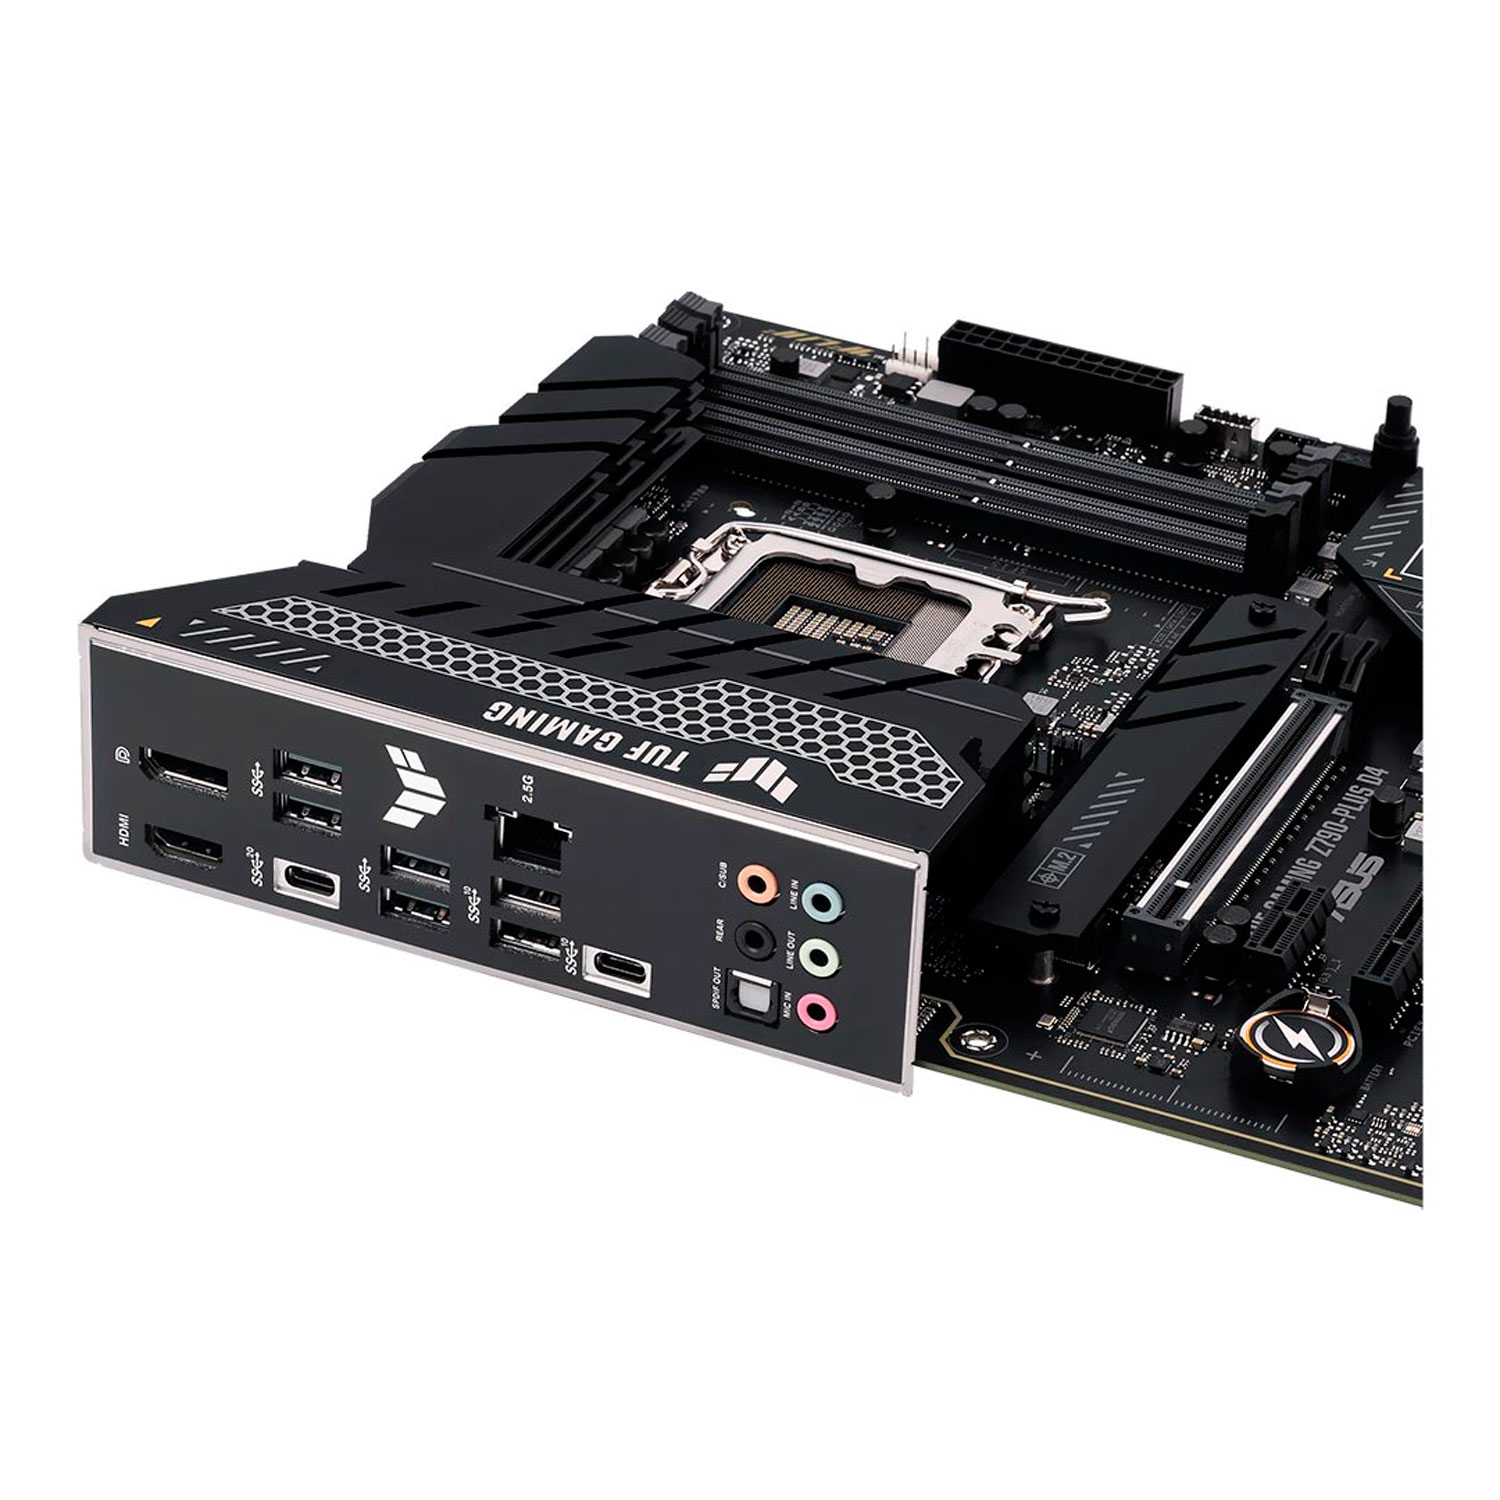 Placa Mãe Asus Tuf Gaming Z790 Plus D4 / LGA 1700 / Chipset Intel Z790 / DDR4 / ATX